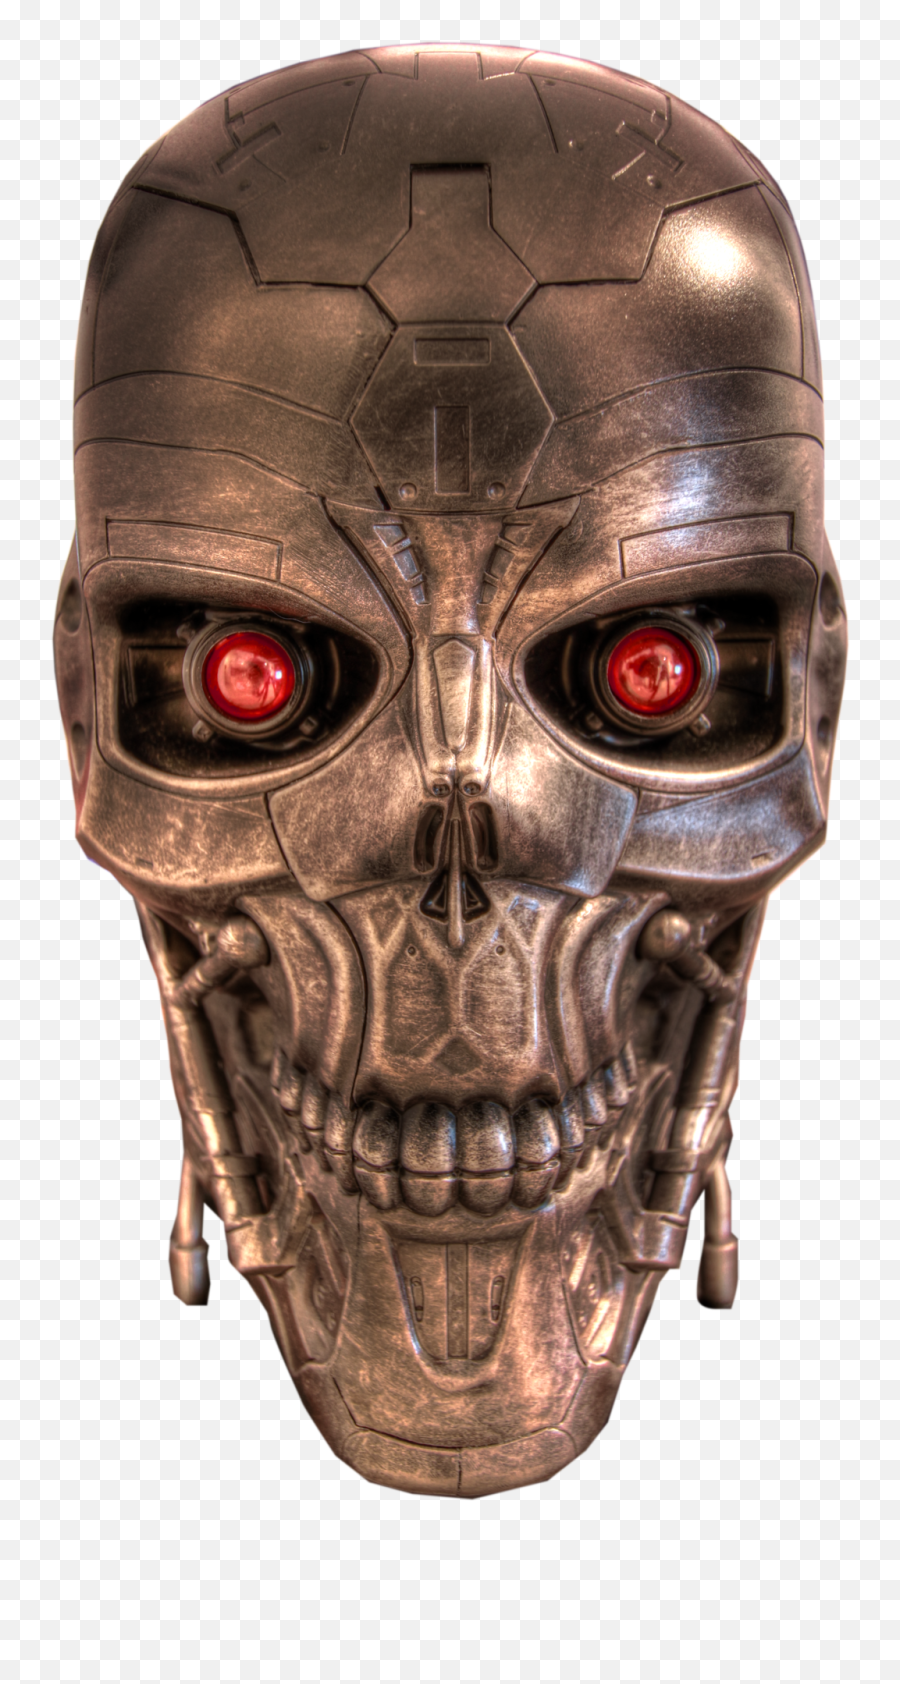 Download Terminator Skull Png Image For Free - Robot Head Transparent Bg,Skull Face Png